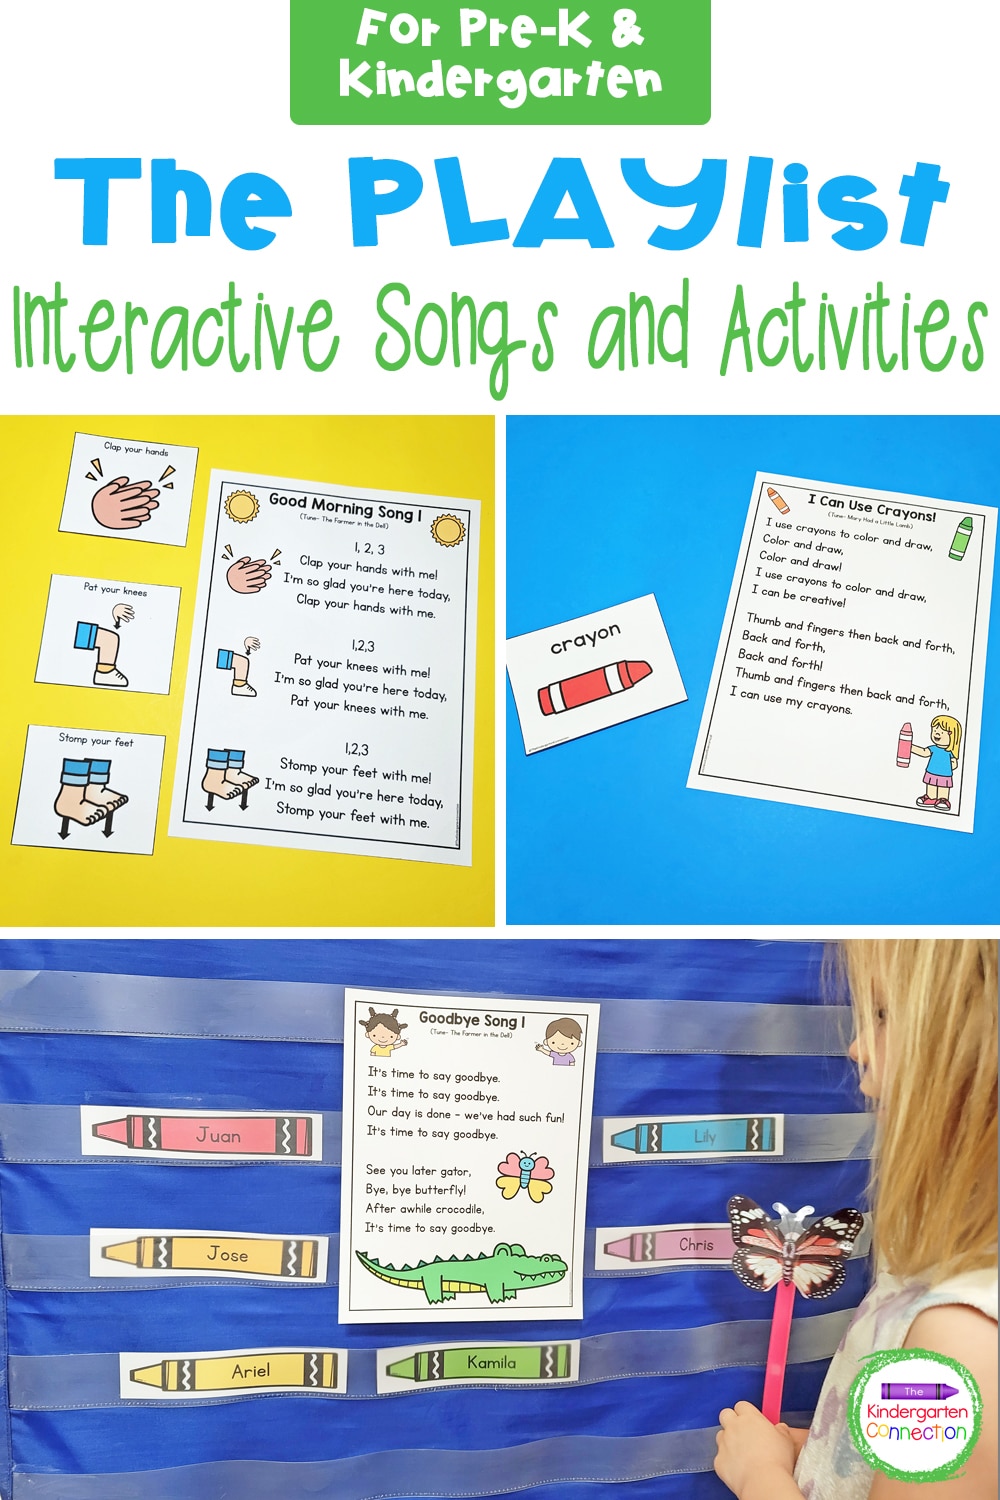 The PLAYlist - Songs and Activities for Pre-K & Kindergarten